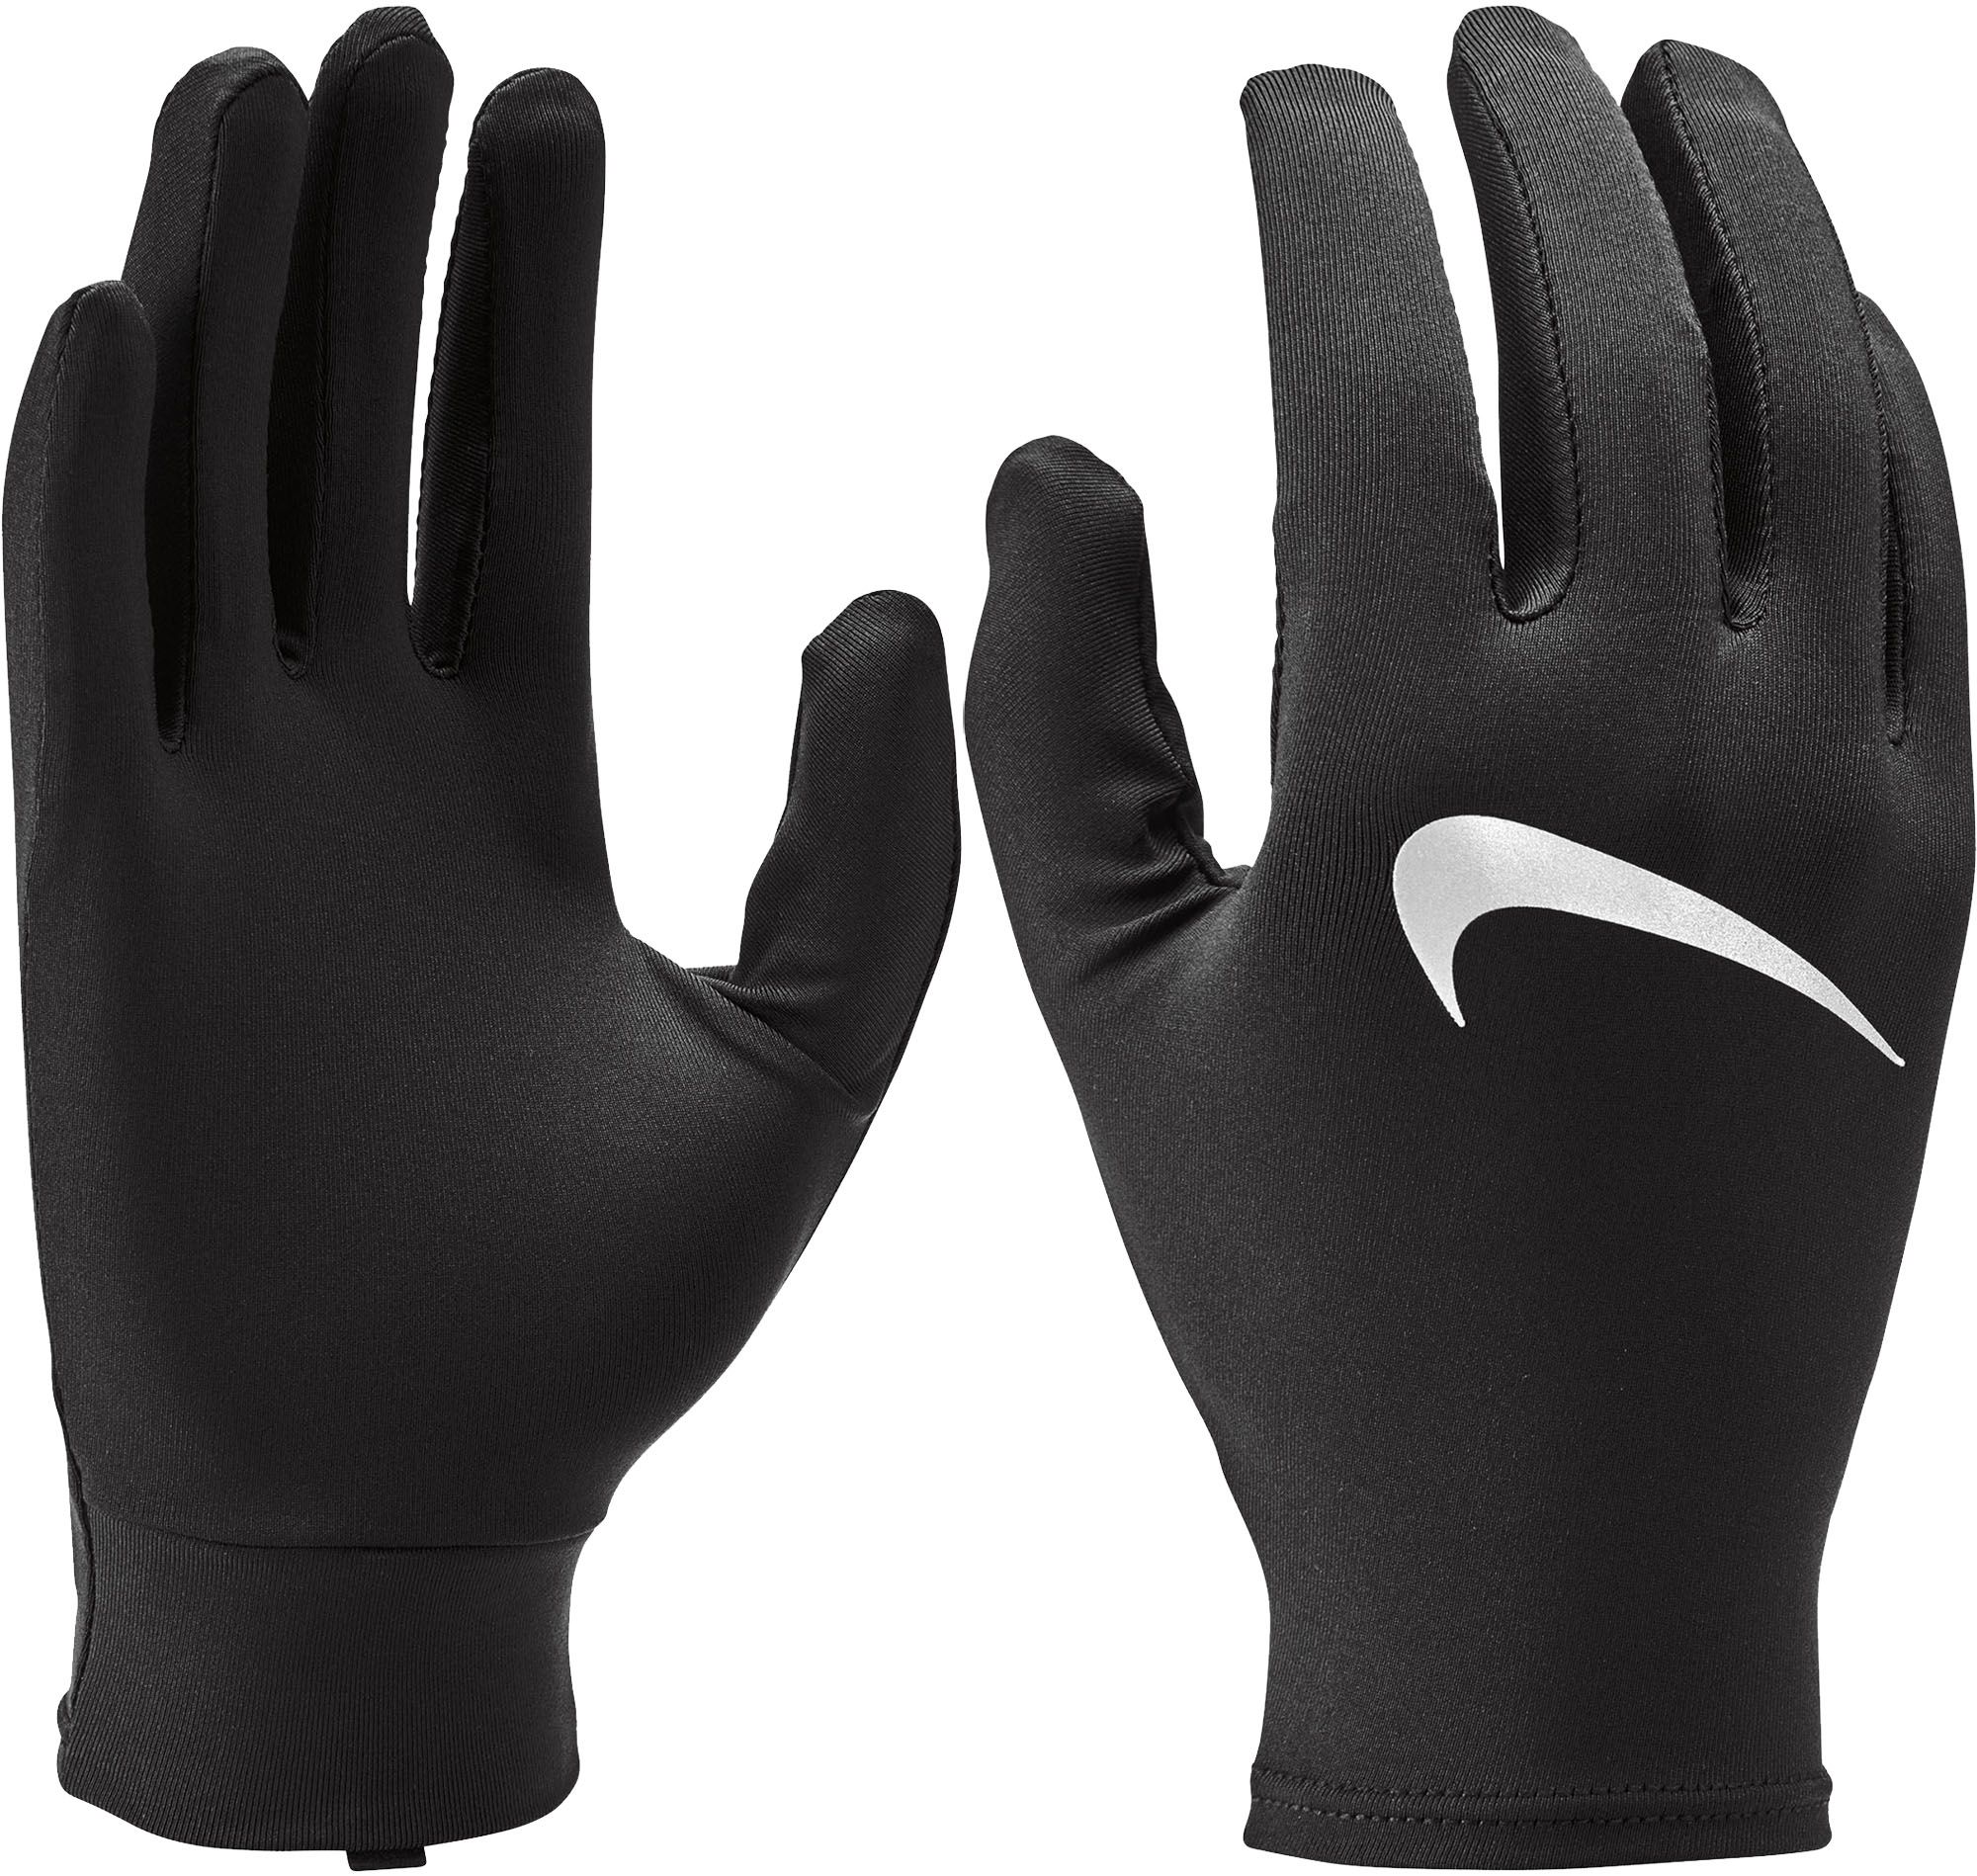 nike winter gloves womens